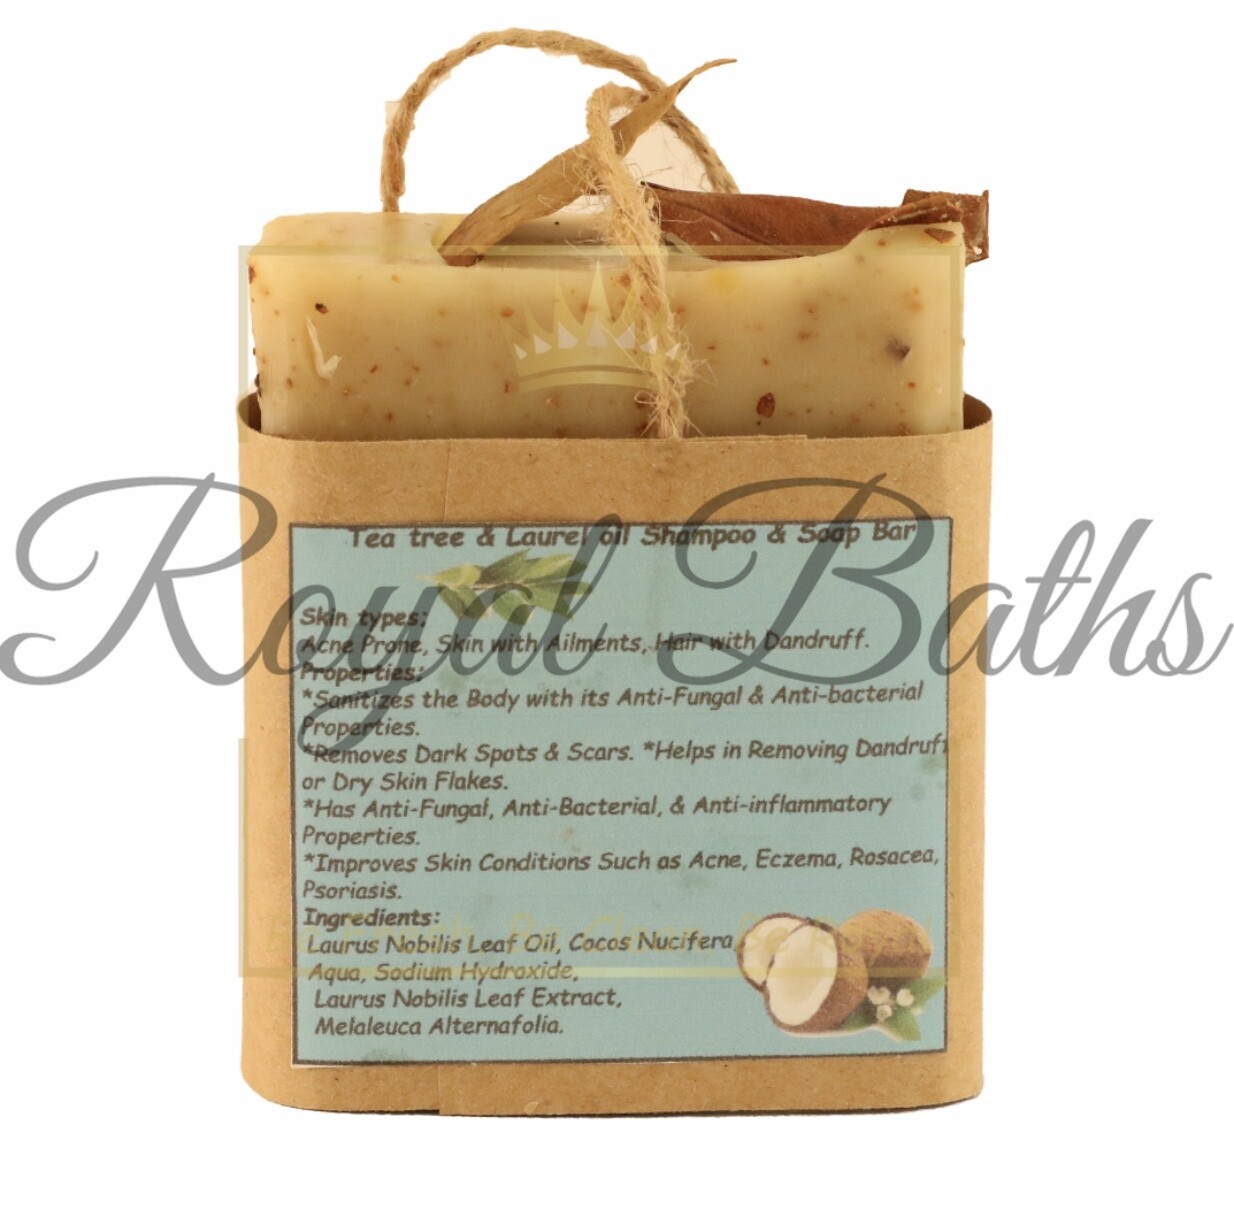 Royal Bath Tea tree & Laurel Oil Shampoo & Soap Bar